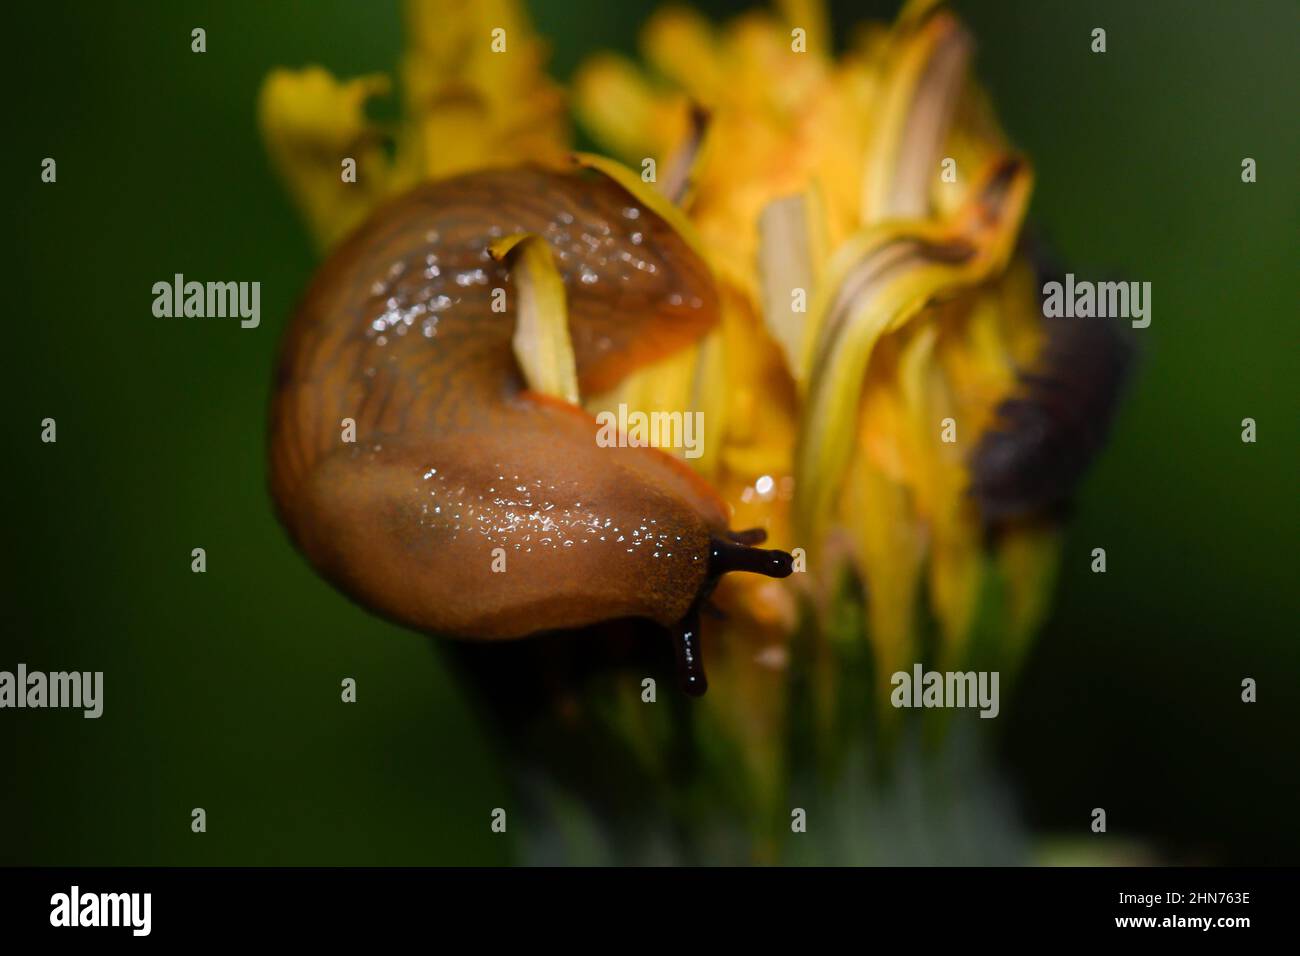 Close-up of a slug eating a dandelion flower Stock Photo